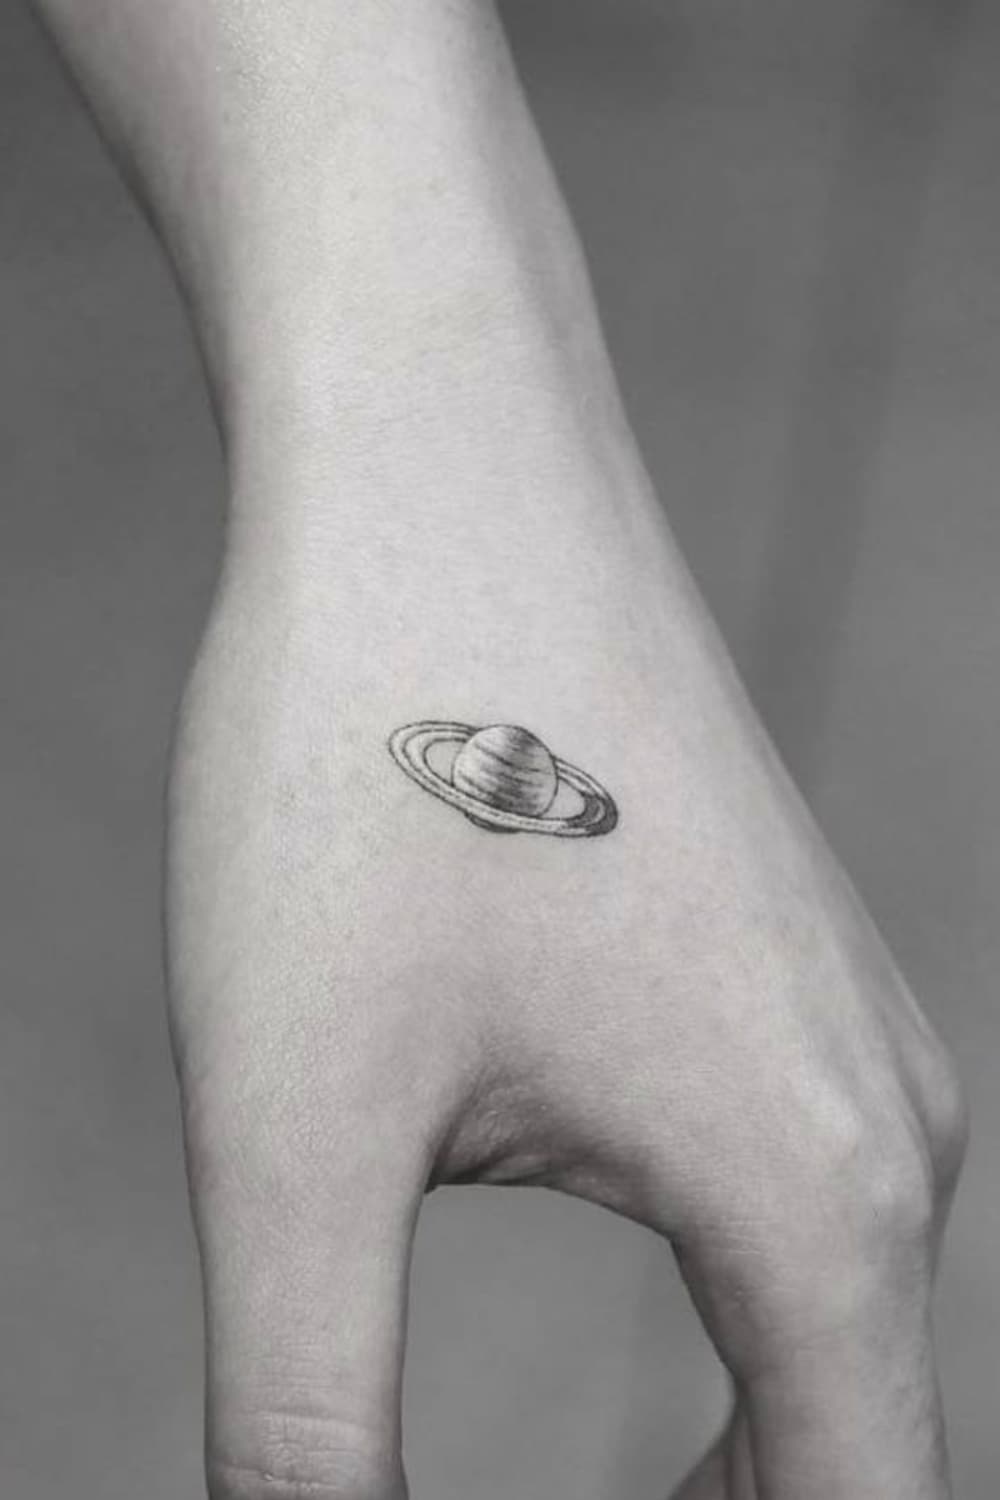 Small Planet Hand Tattoo